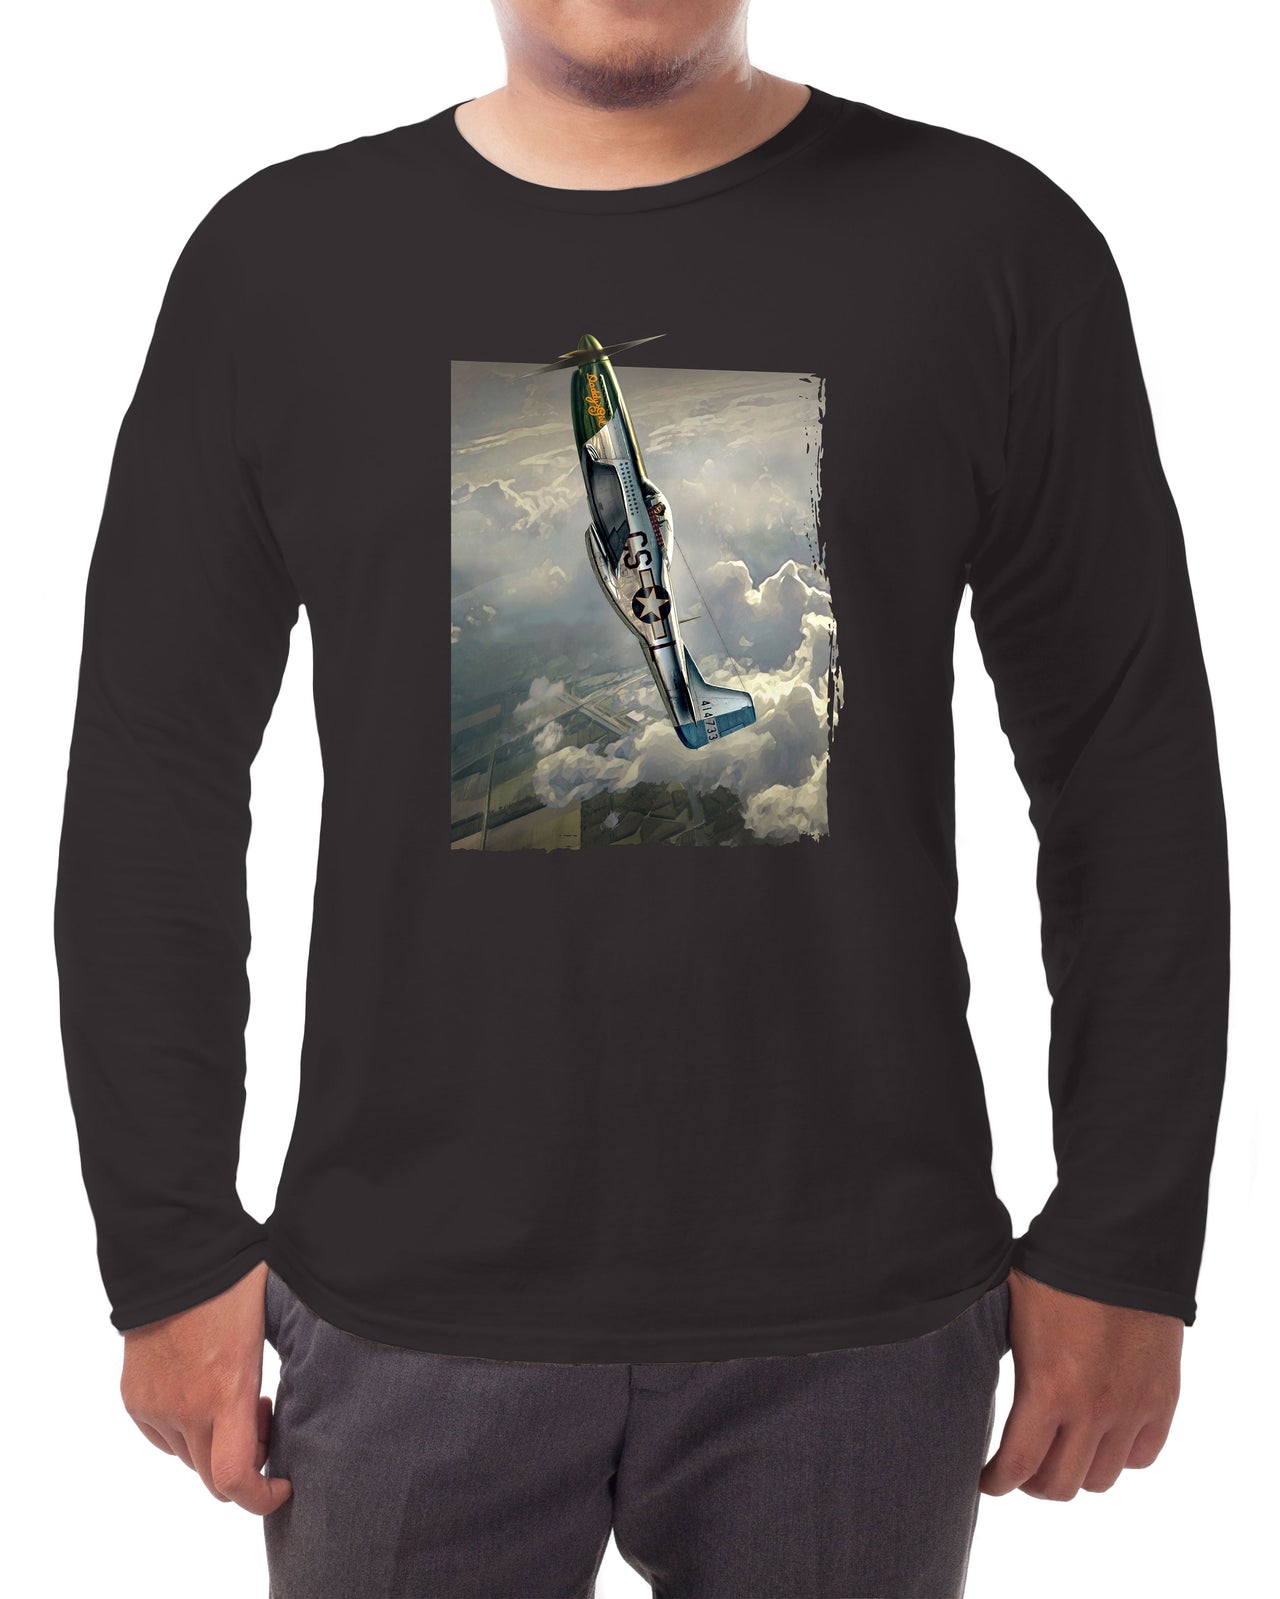 P-51 Mustang - 'Warhorse' - Long-sleeve T-shirt